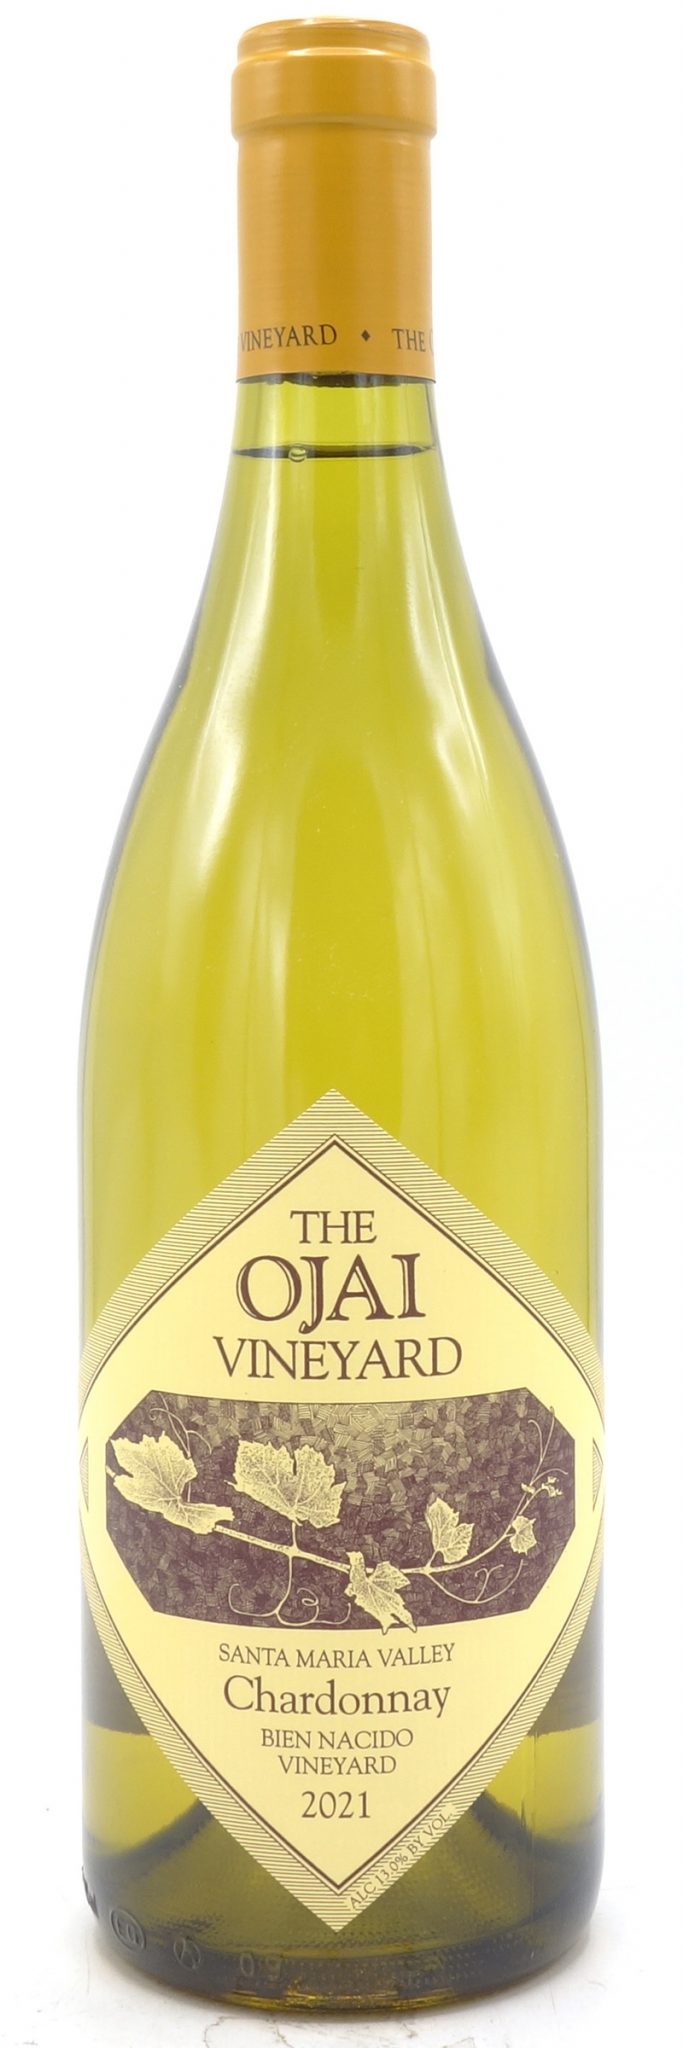 2021 The Ojai Vineyard Chardonnay Bien Nacido Vineyard 750ml